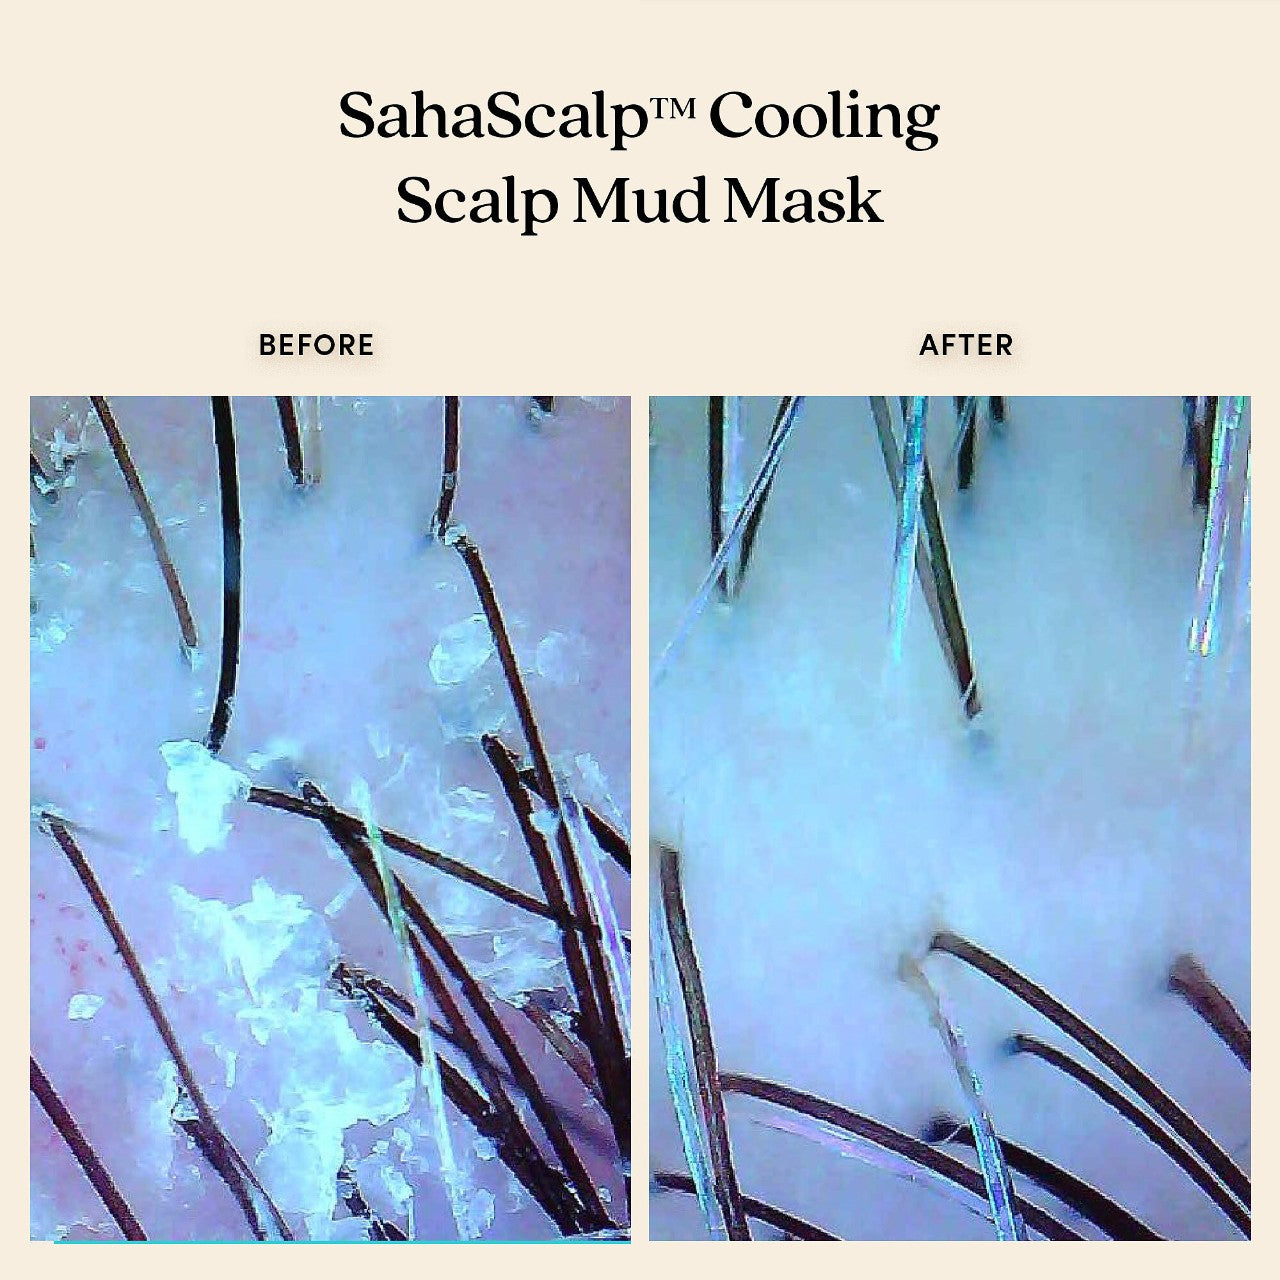 SahaScalp™ Cooling Scalp Mud Mask